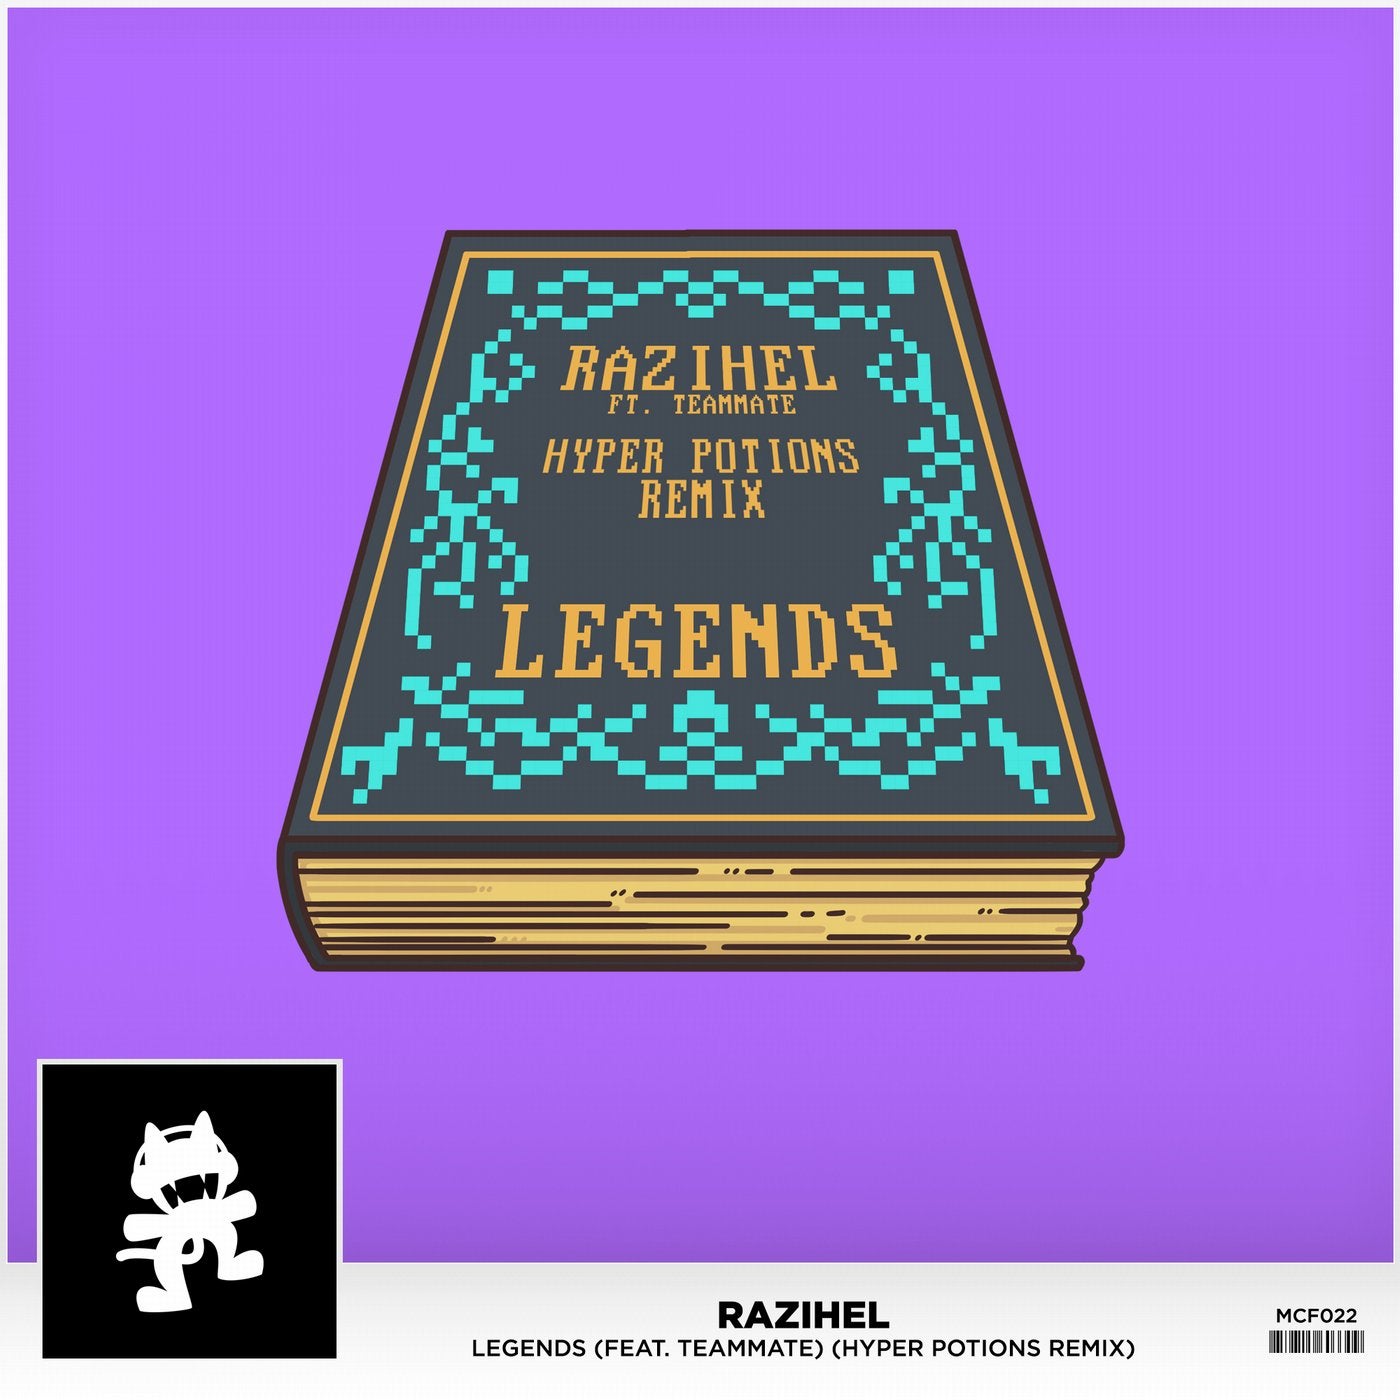 Legends - Hyper Potions Remix